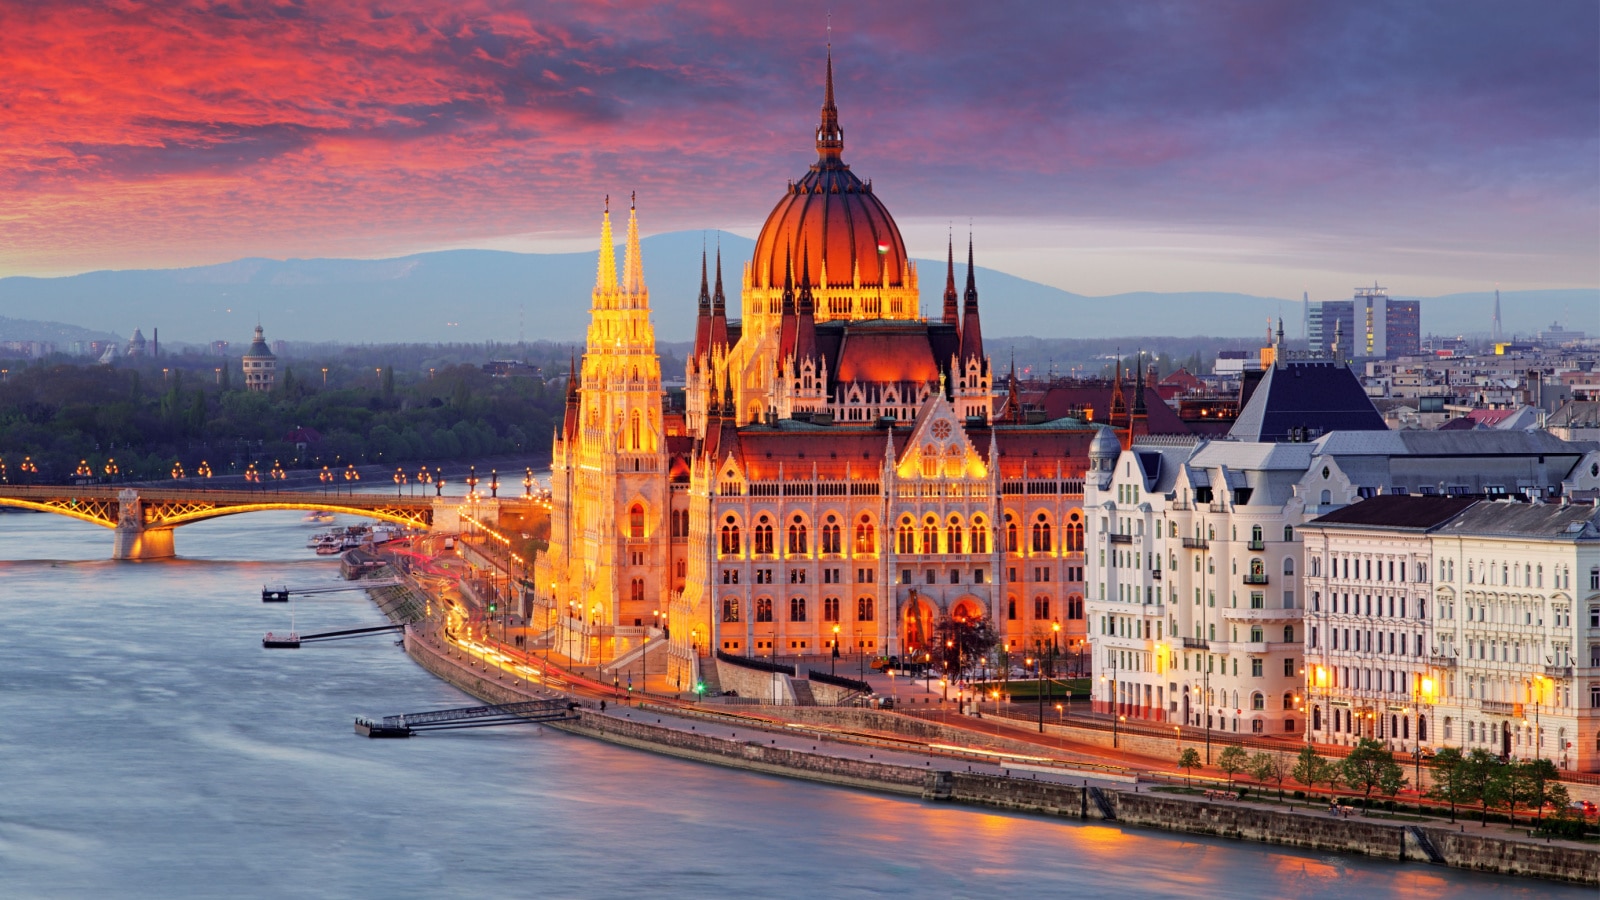 Hungarian parliament, Budapest at sunset